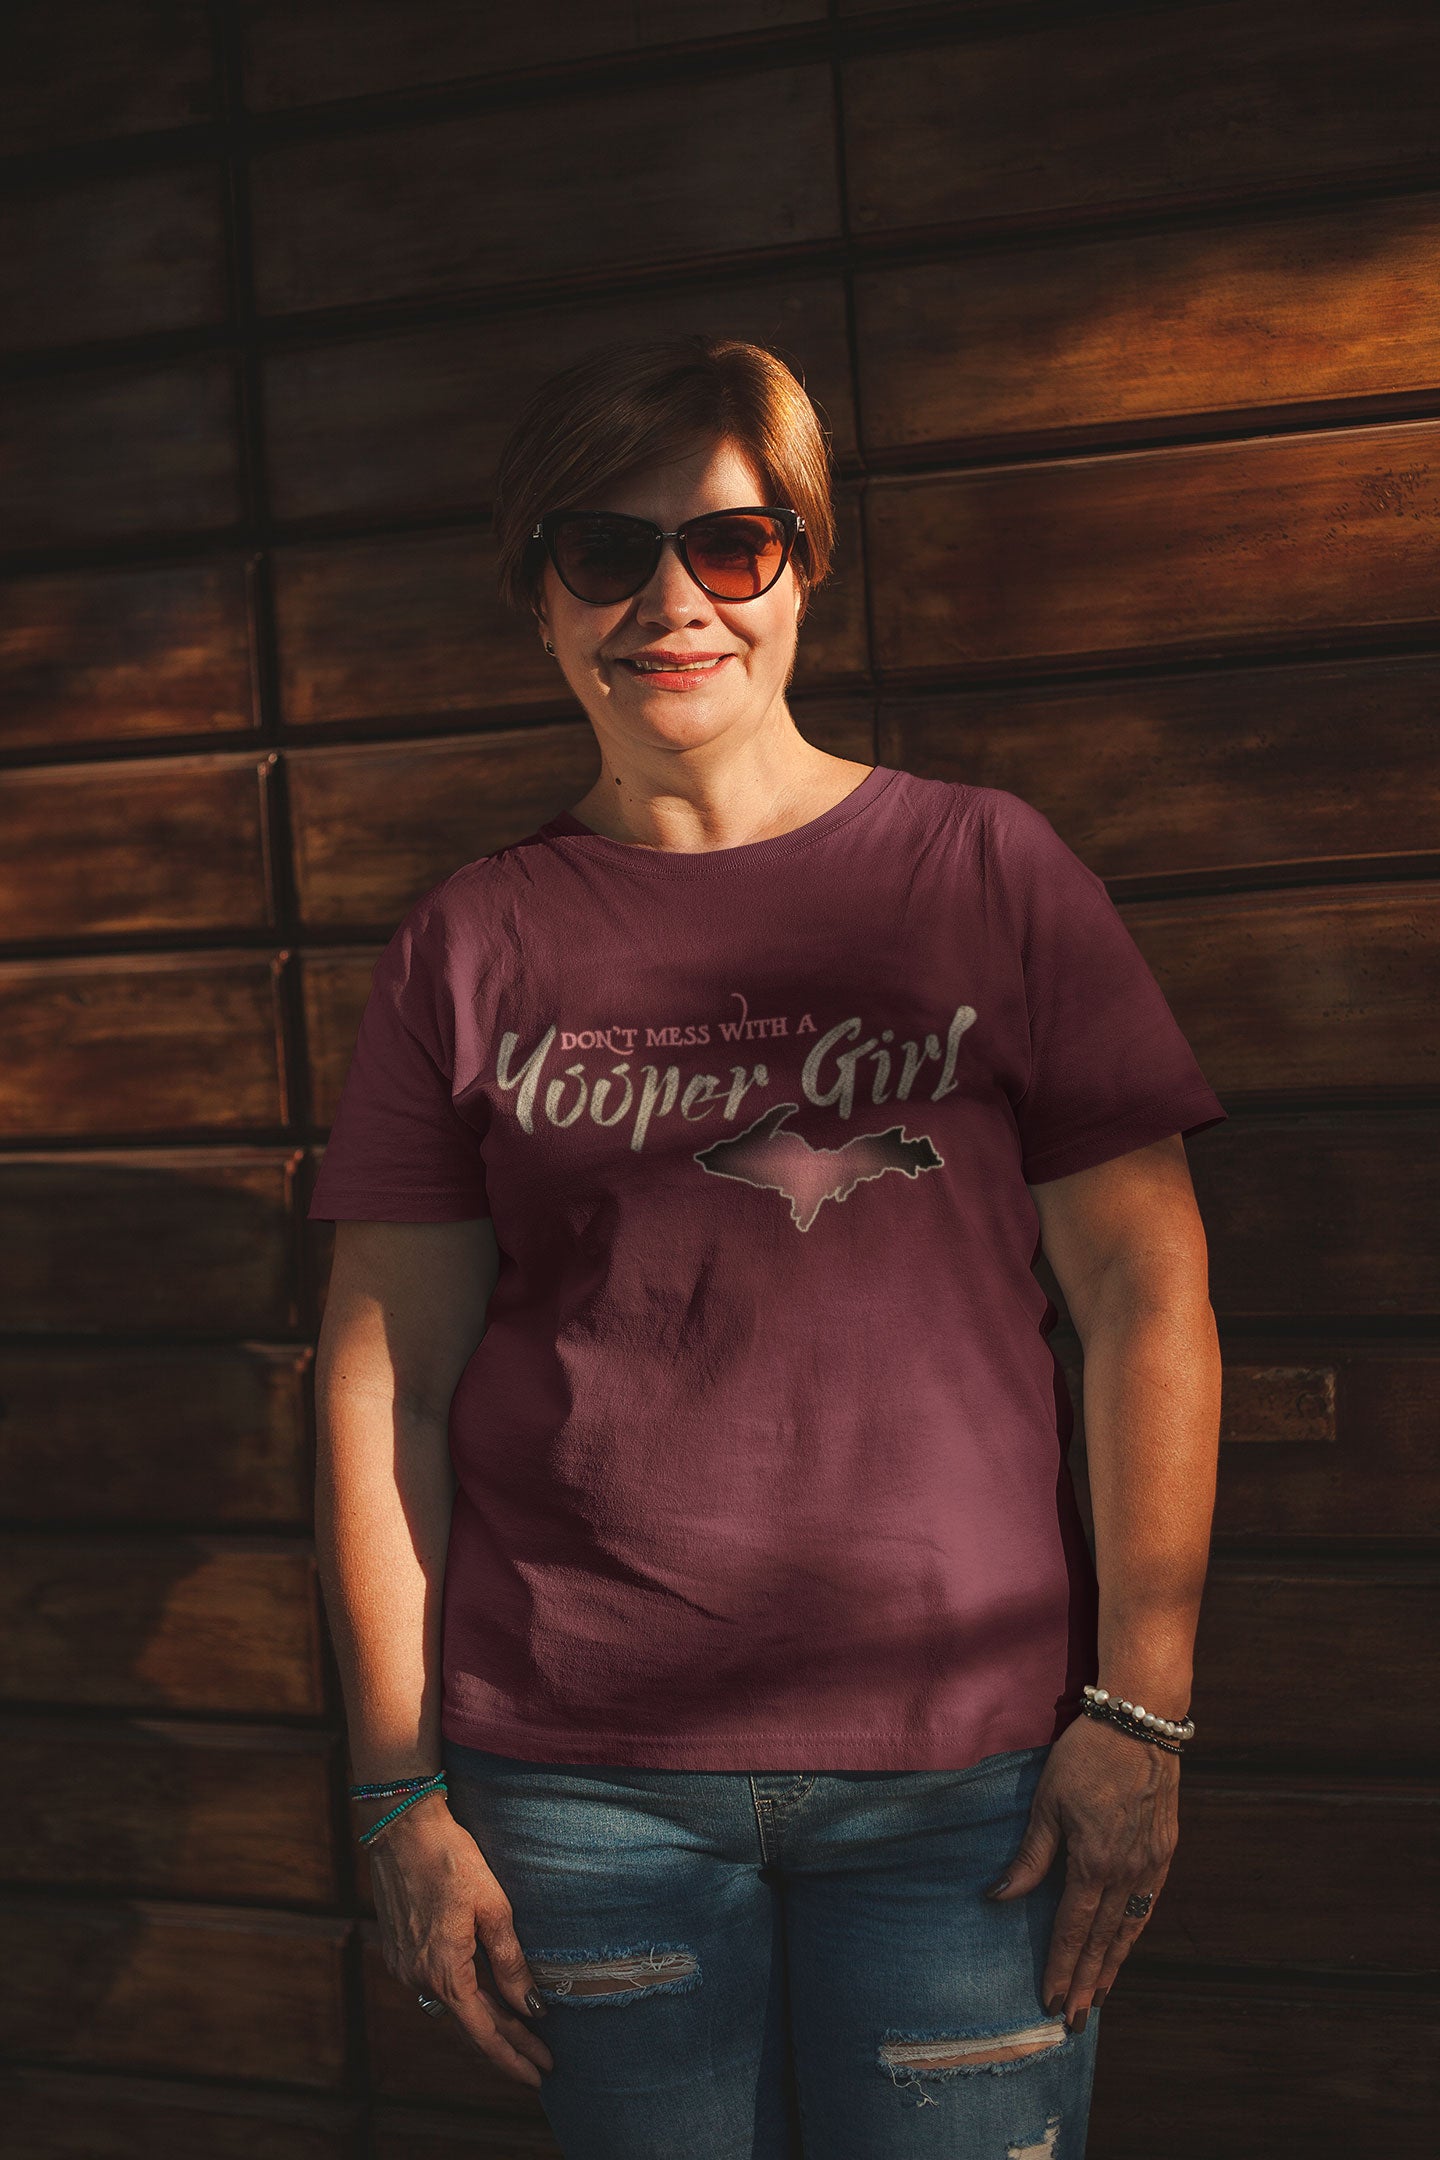 Yooper Girl T-shirt | Unisex and Women's Cut | Upper Michigan Shirt